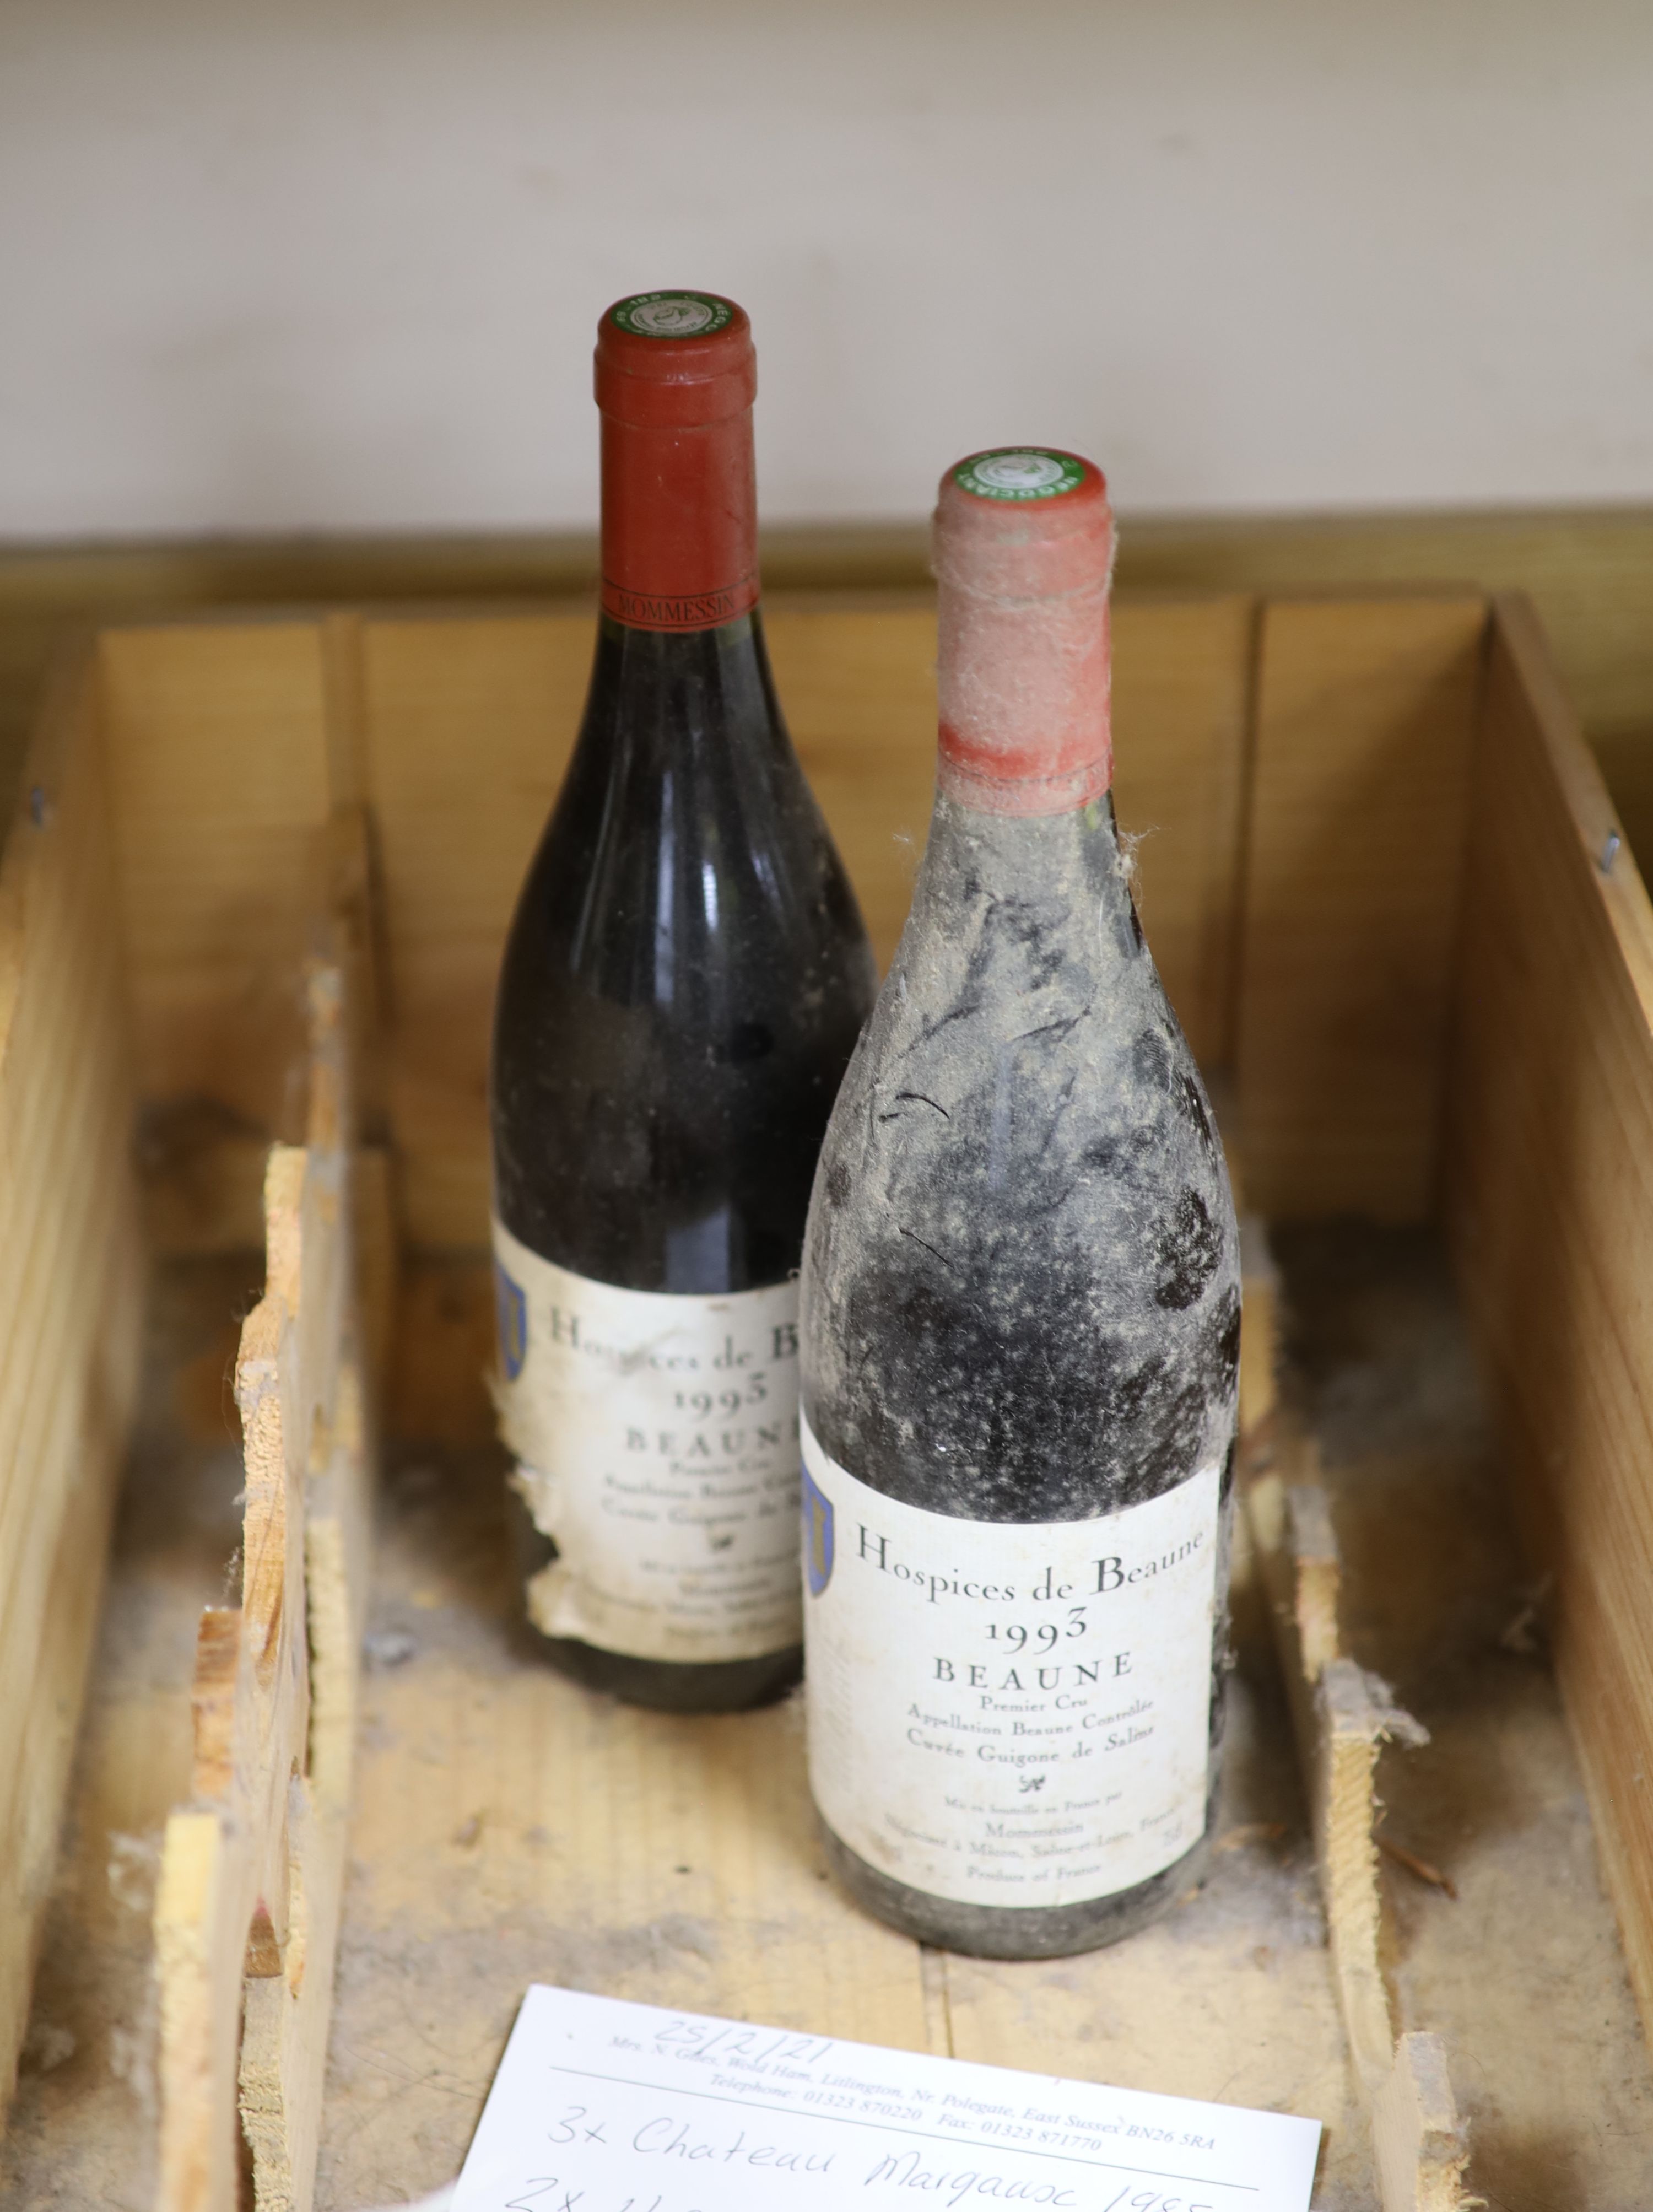 Two bottles Hospice de Beaune 1993